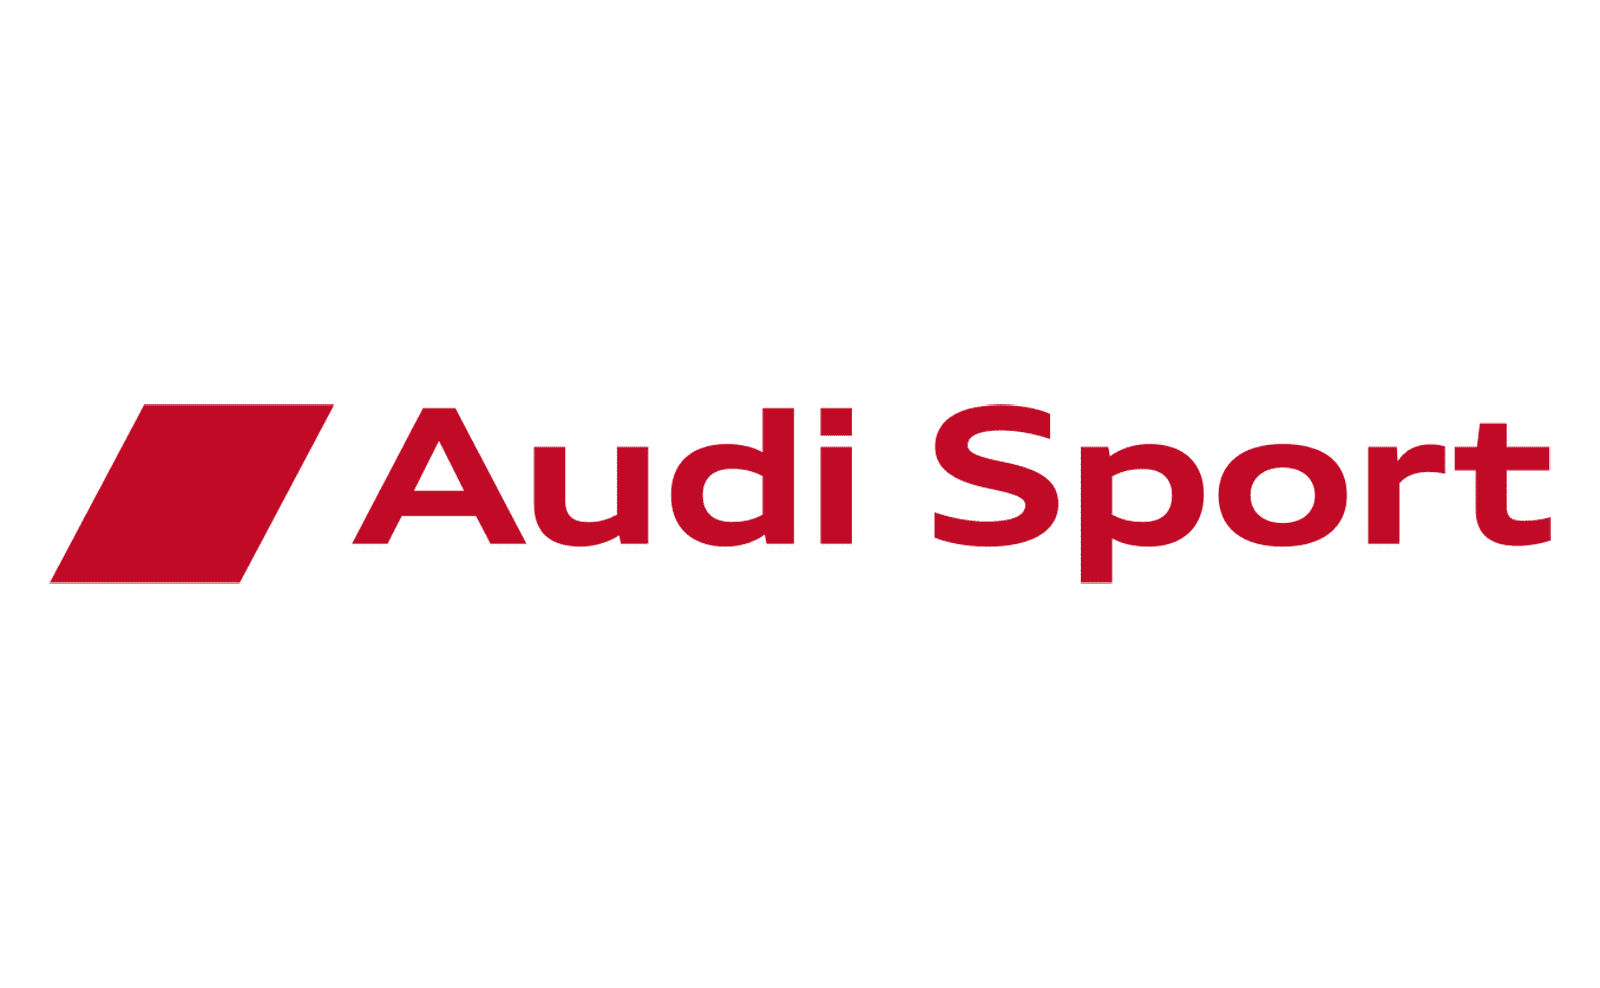 Audi Sport